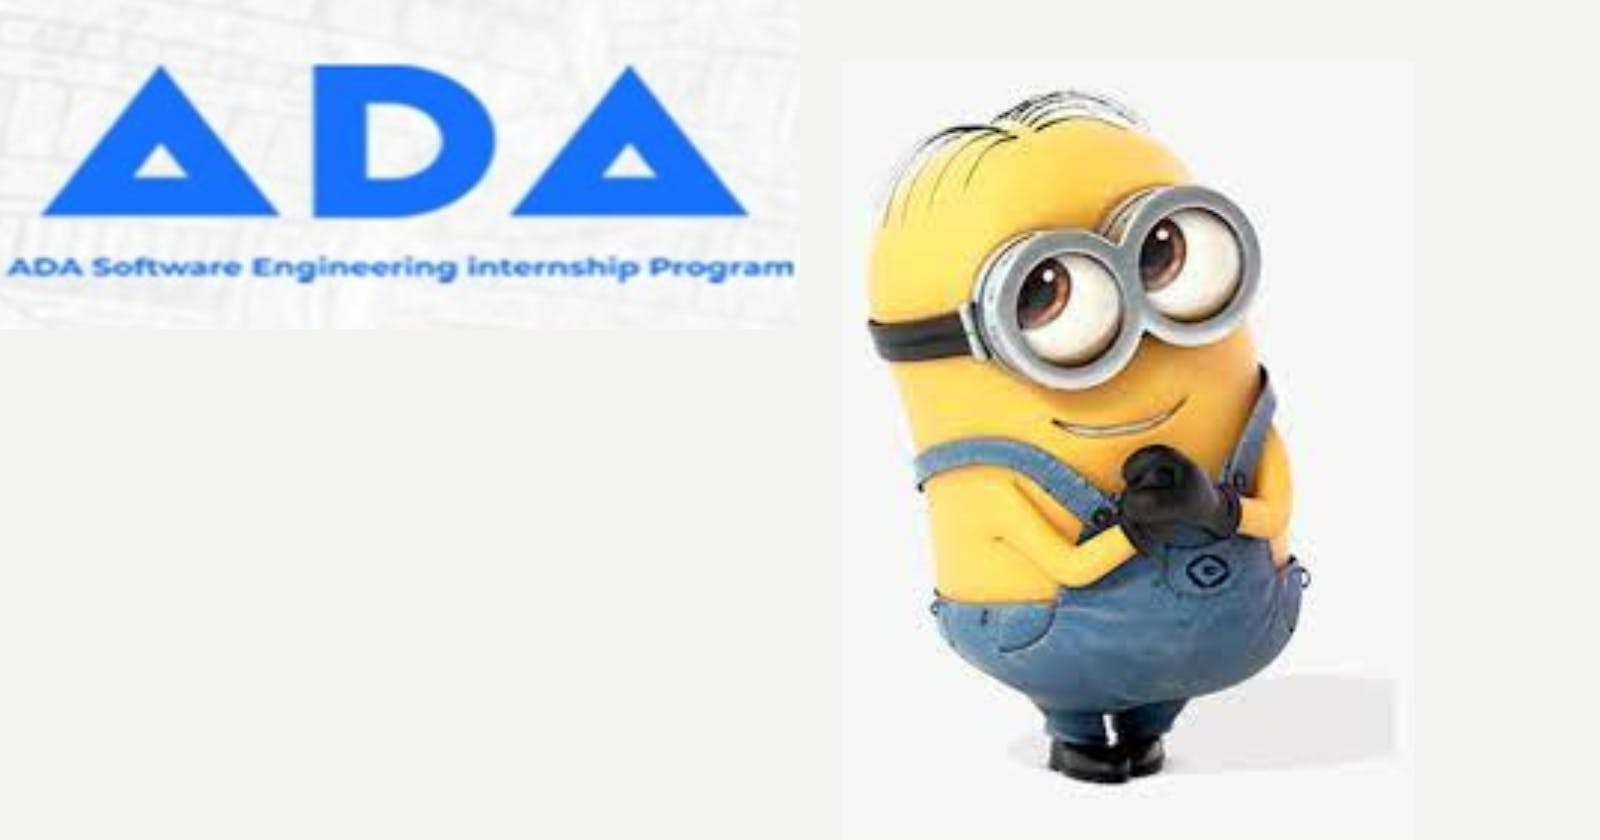 My Tech Journey with the ADA Software Engineering Internship Program